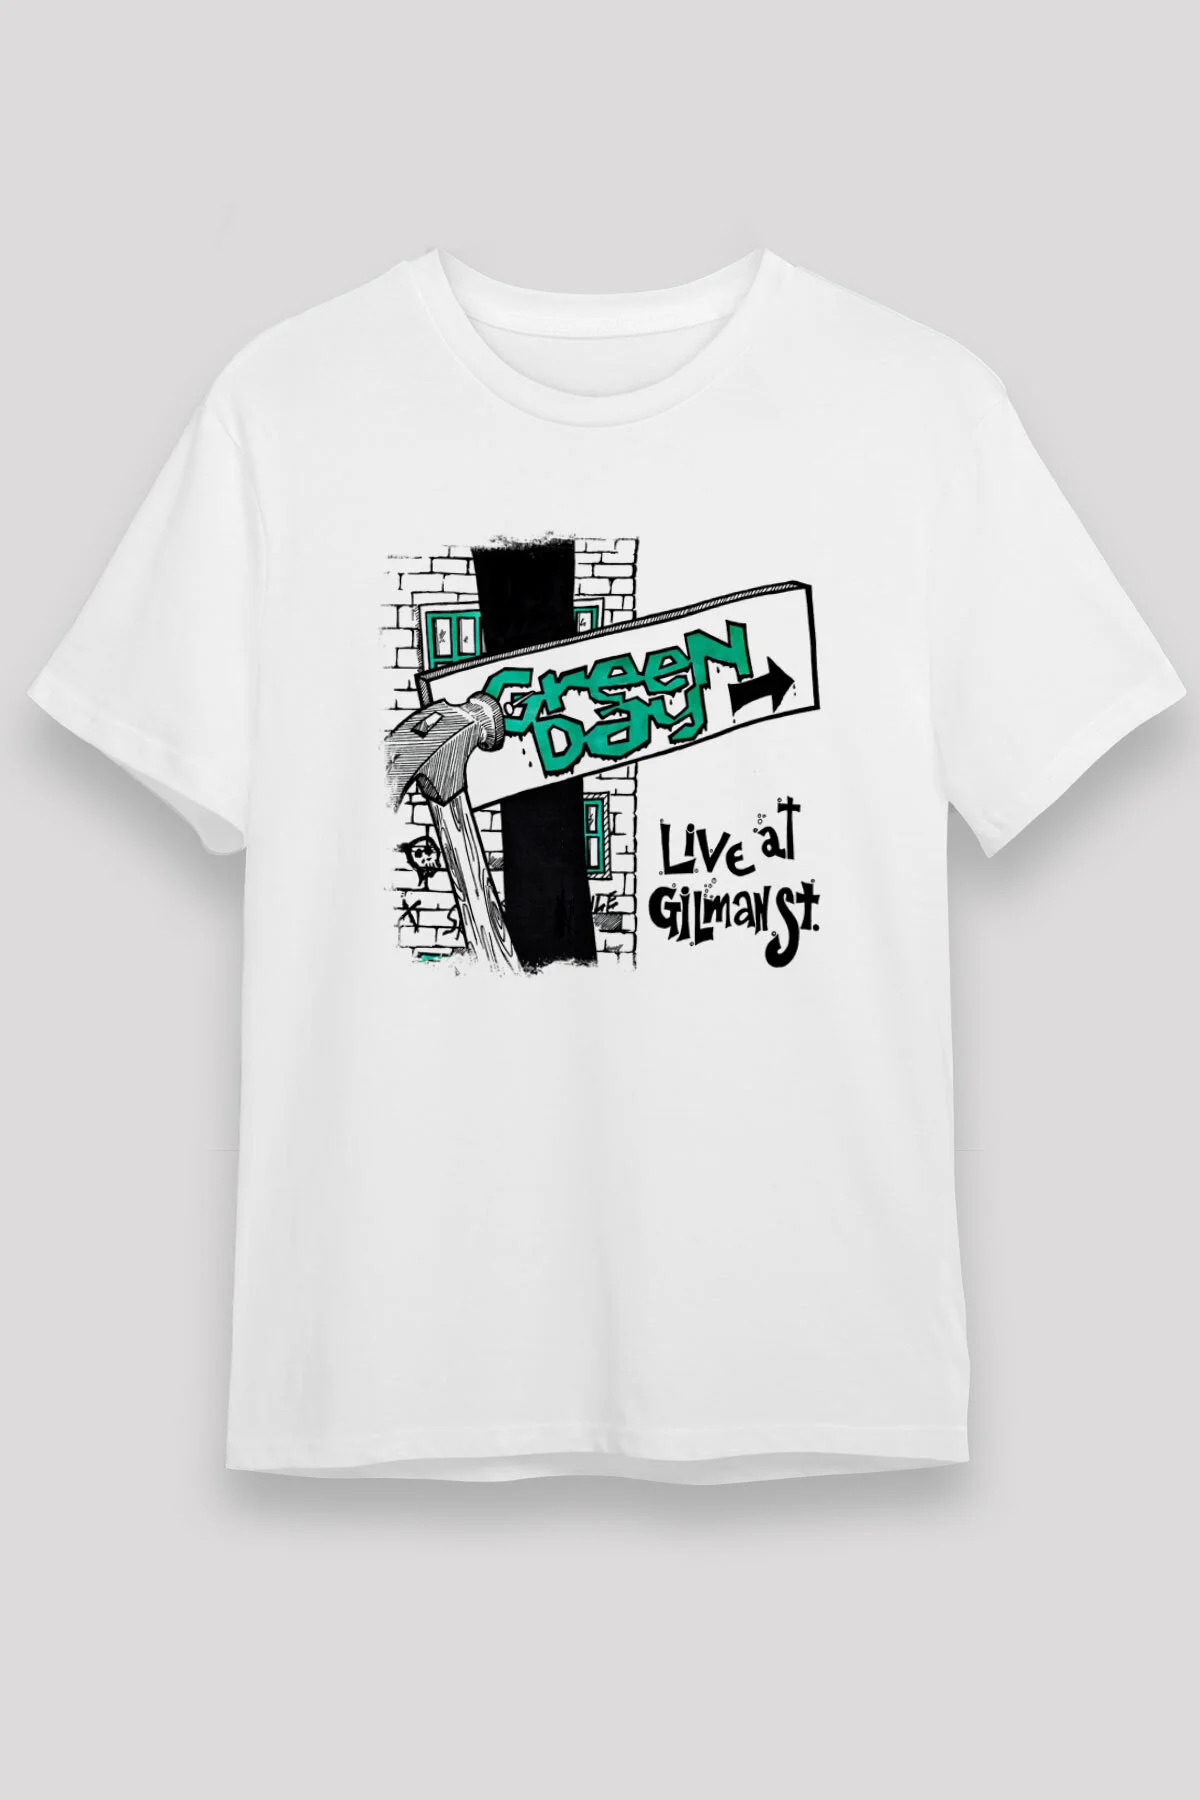 Green Day T shirt , Music Band ,Unisex Tshirt 14/